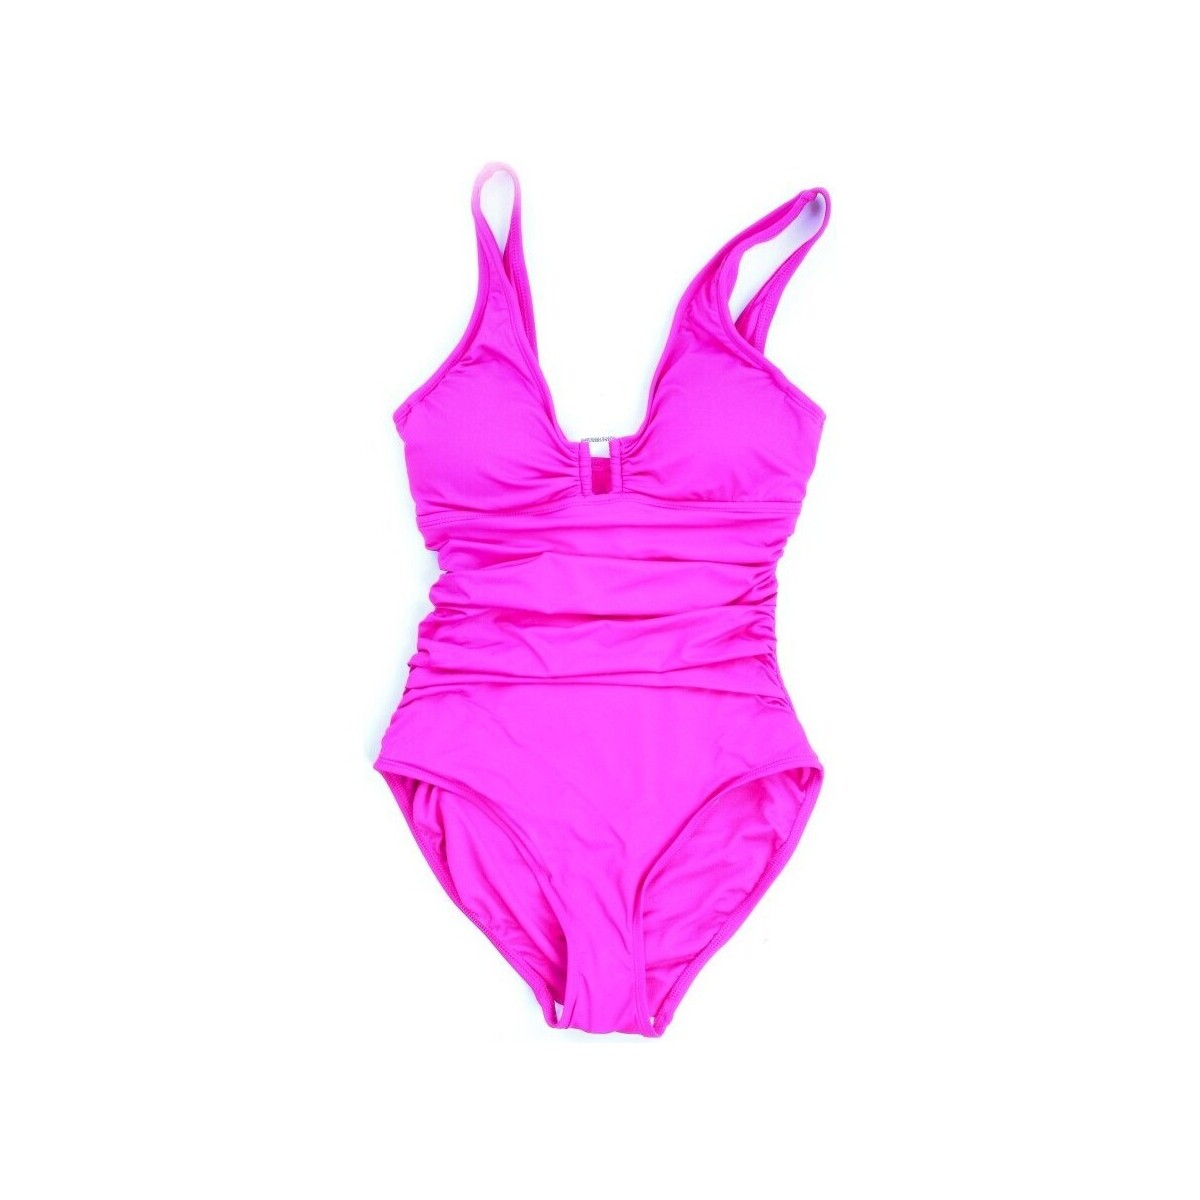 textil Dam Bikini Ralph Lauren 20201016 Rosa